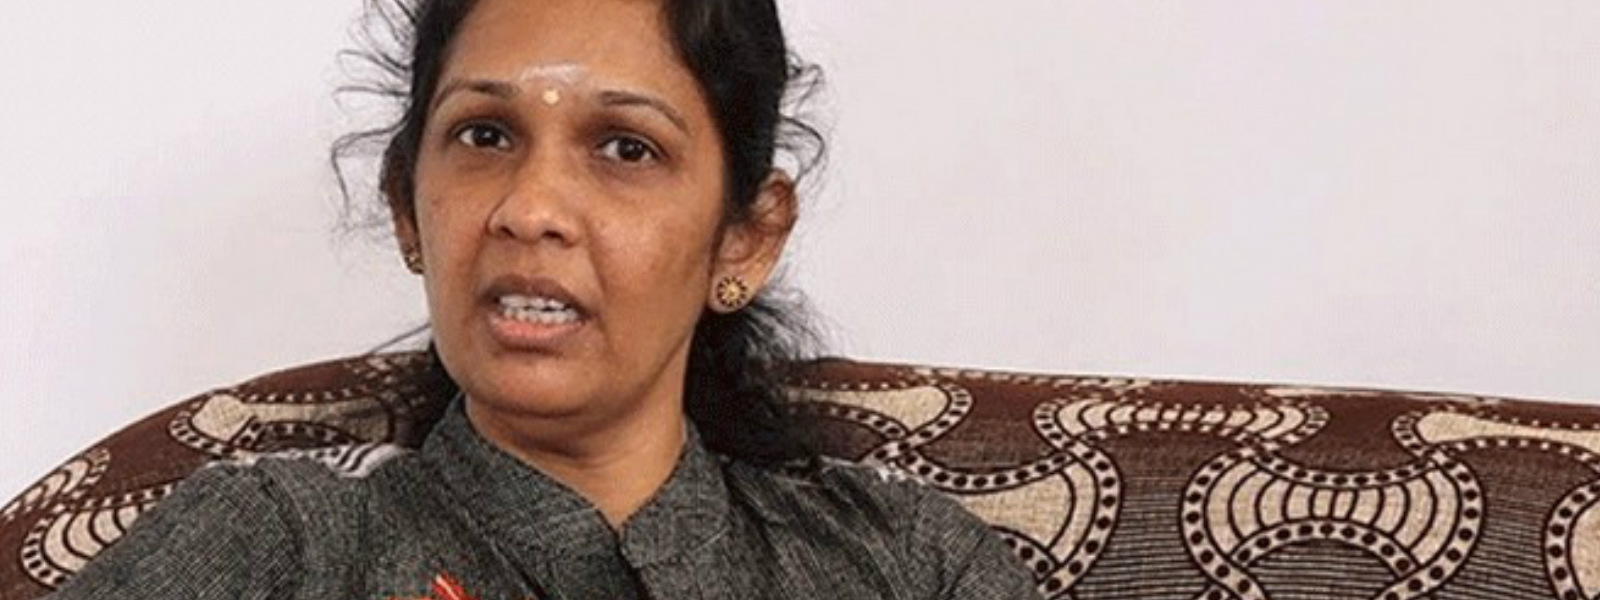 UPDATE: MP Vijayakala released on bail 